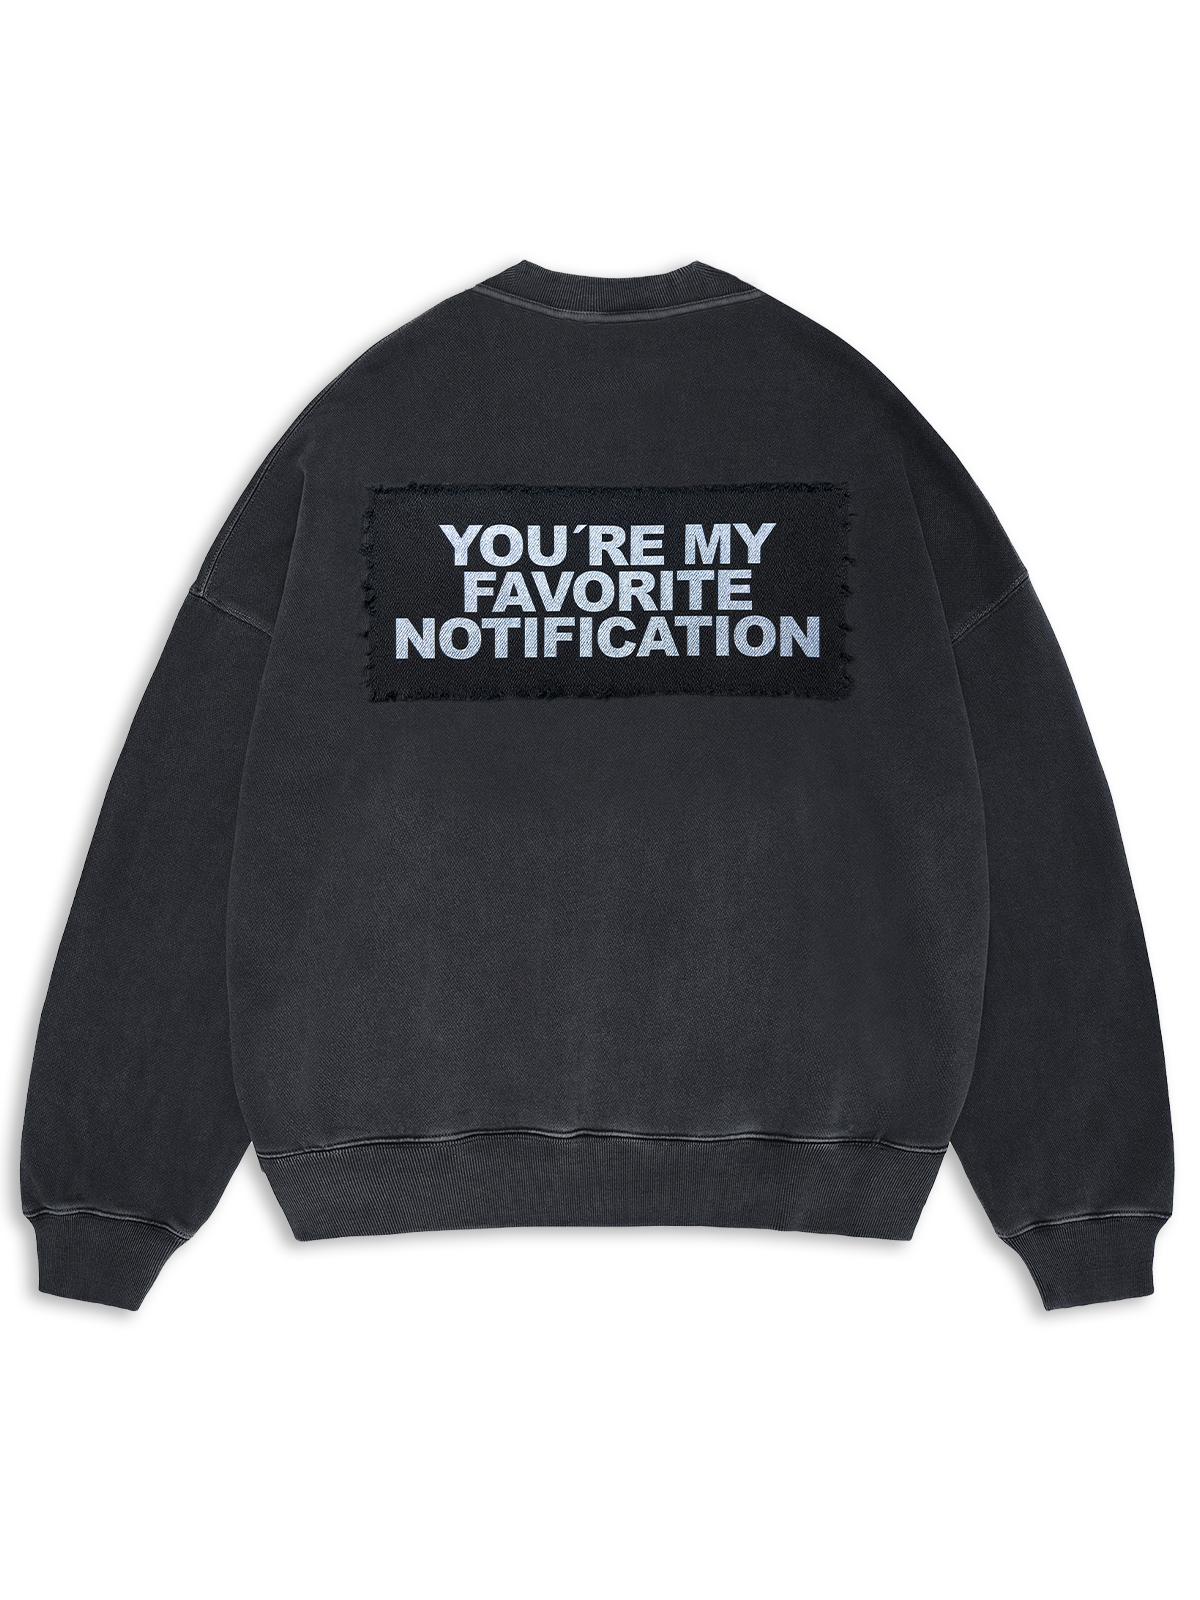 Fav-Notification Sweater